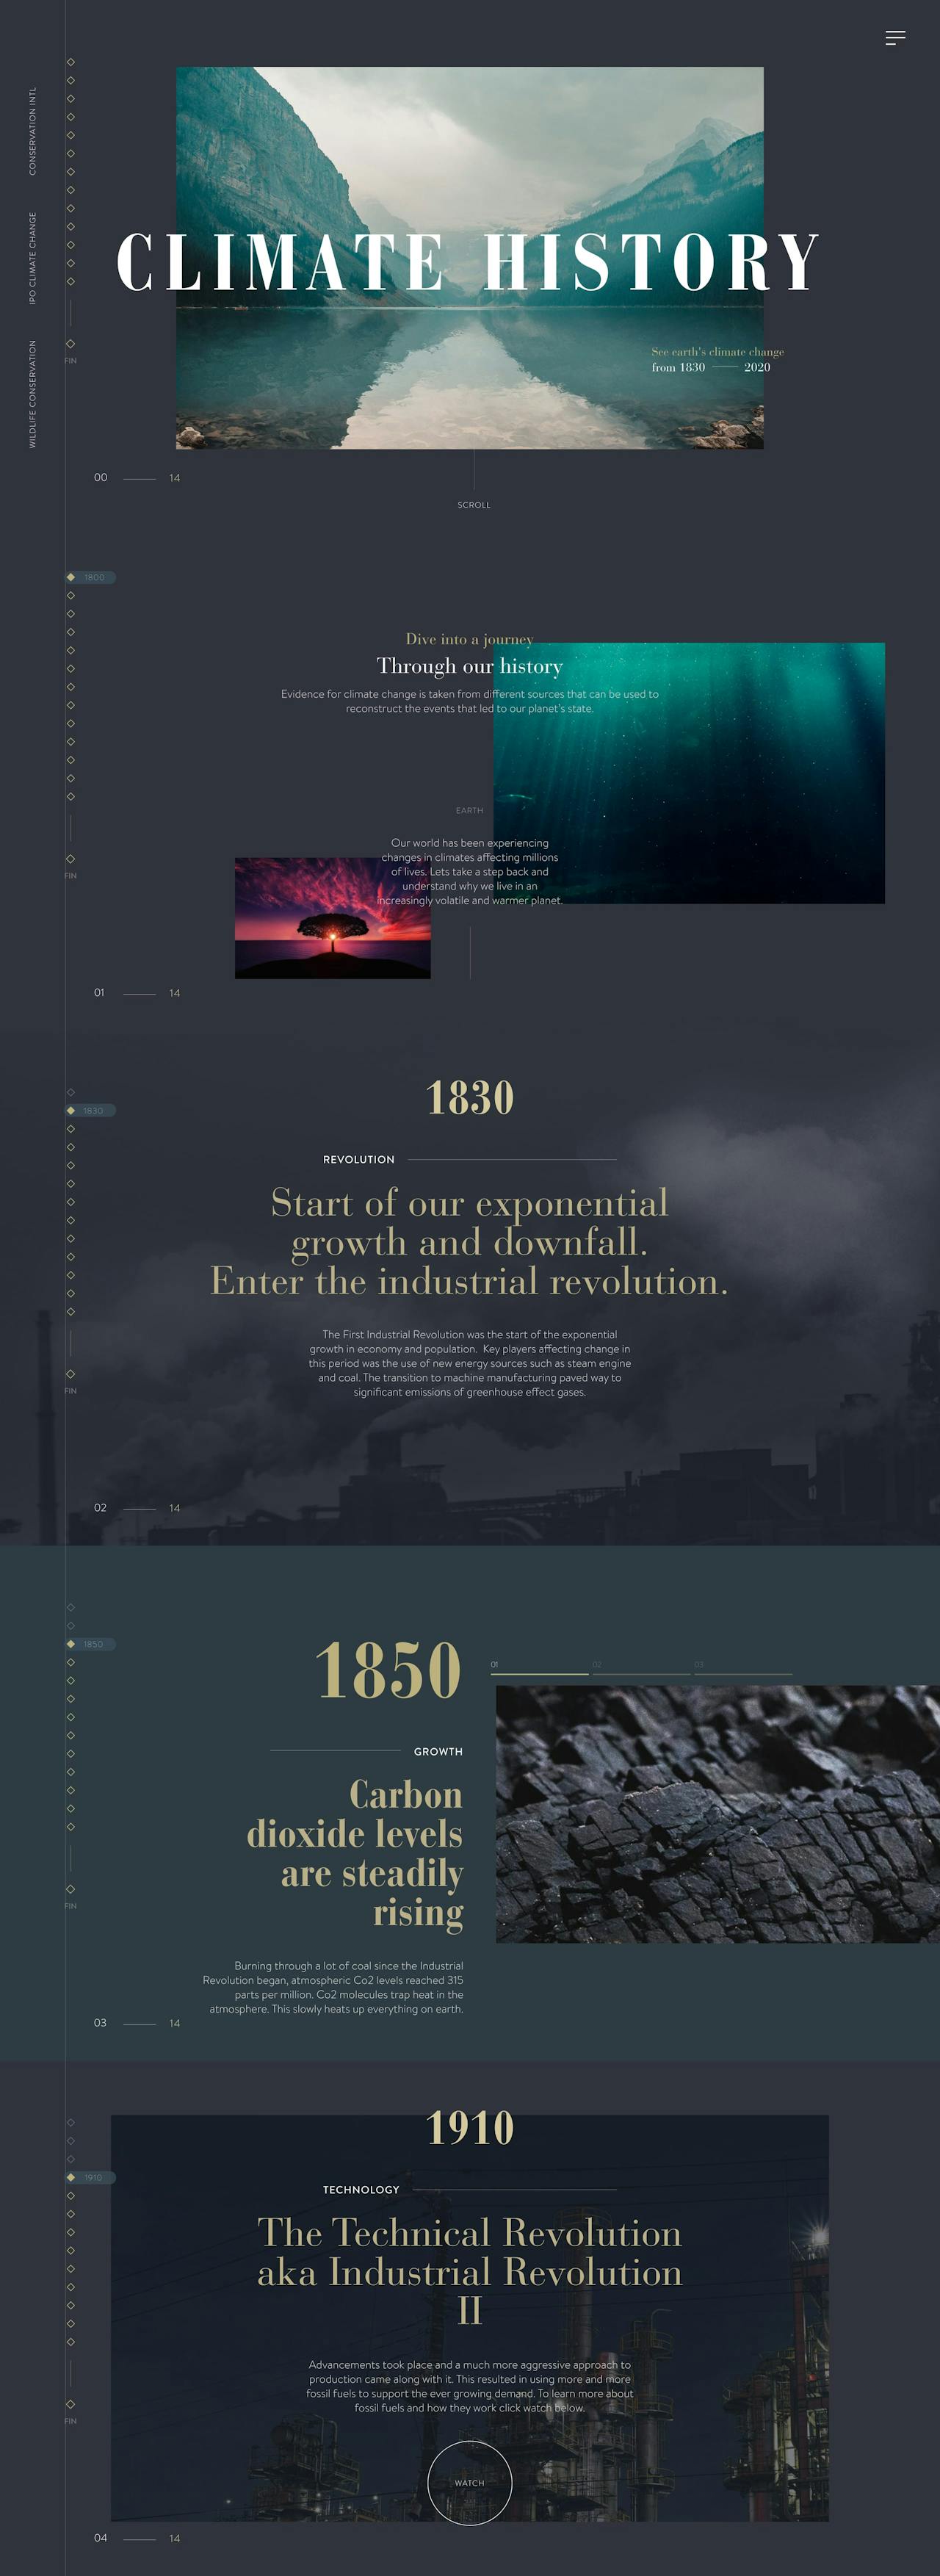 Website Inspiration: Climate History Website Screenshot